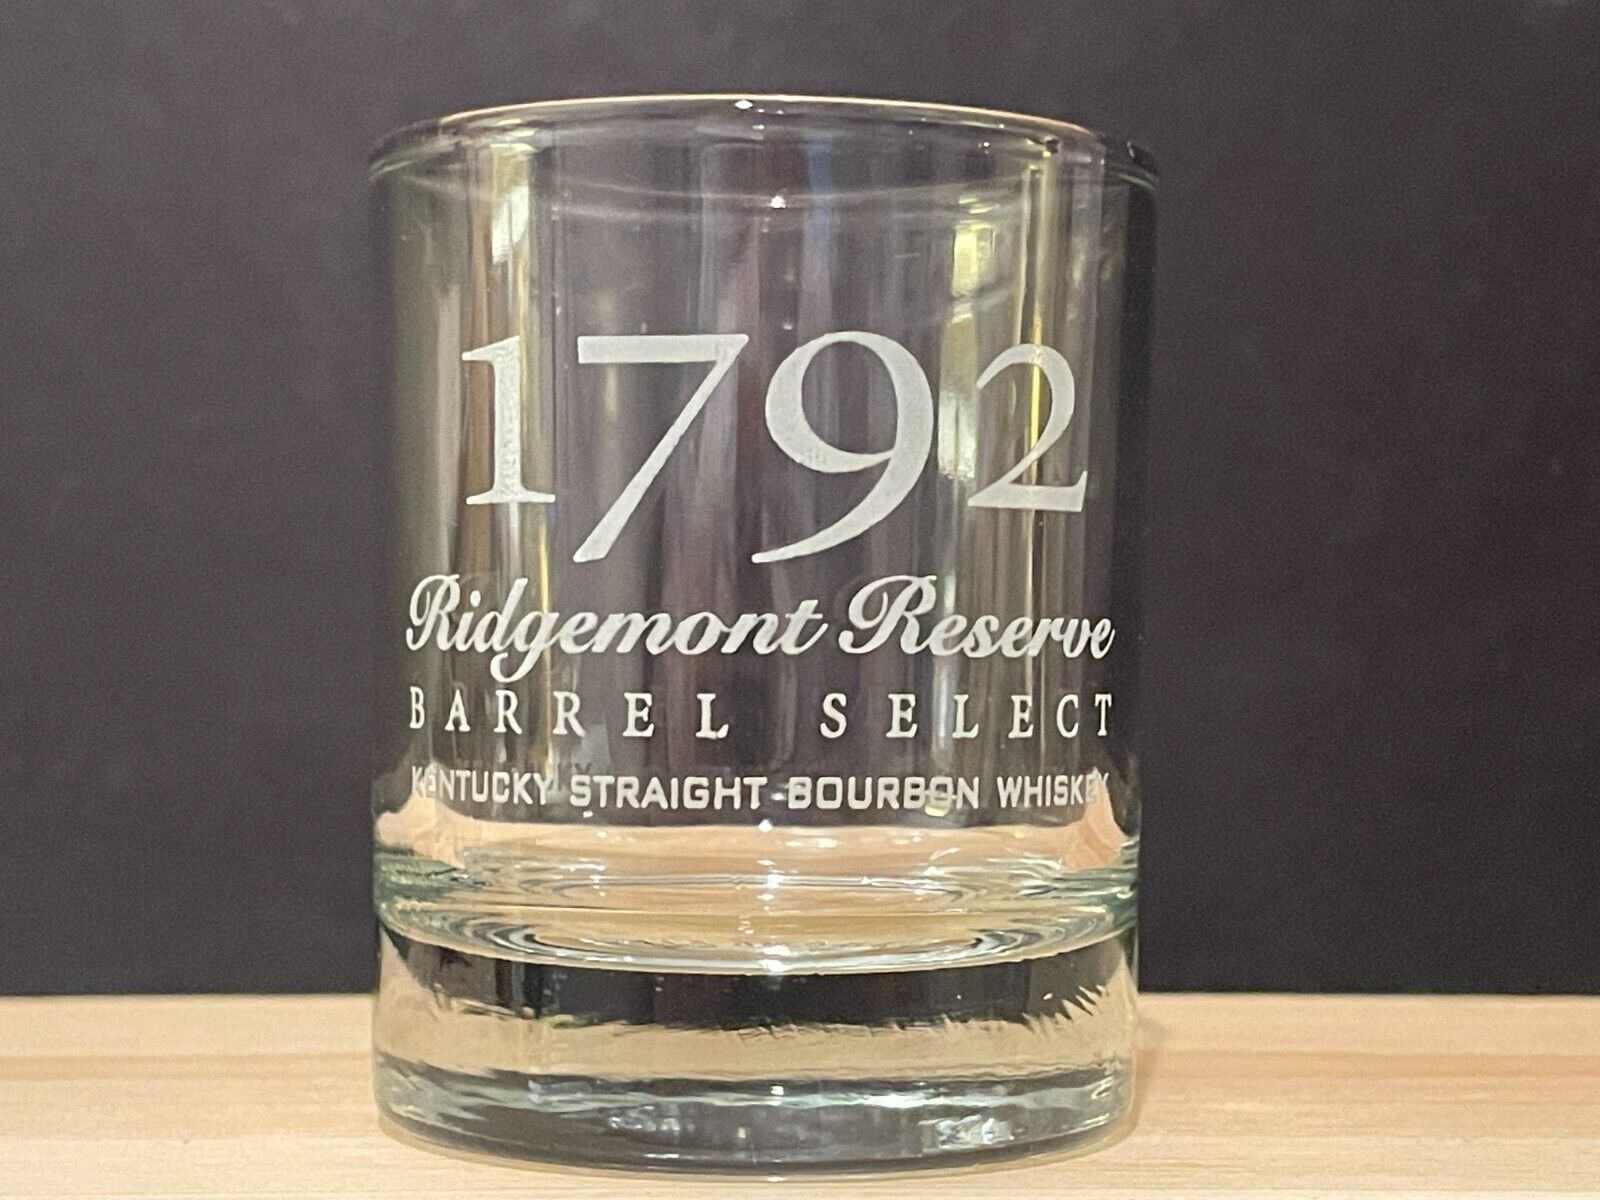 Etched Ridgemont Reserve 1792 Barrel Select Bourbon Whiskey Shot Glass